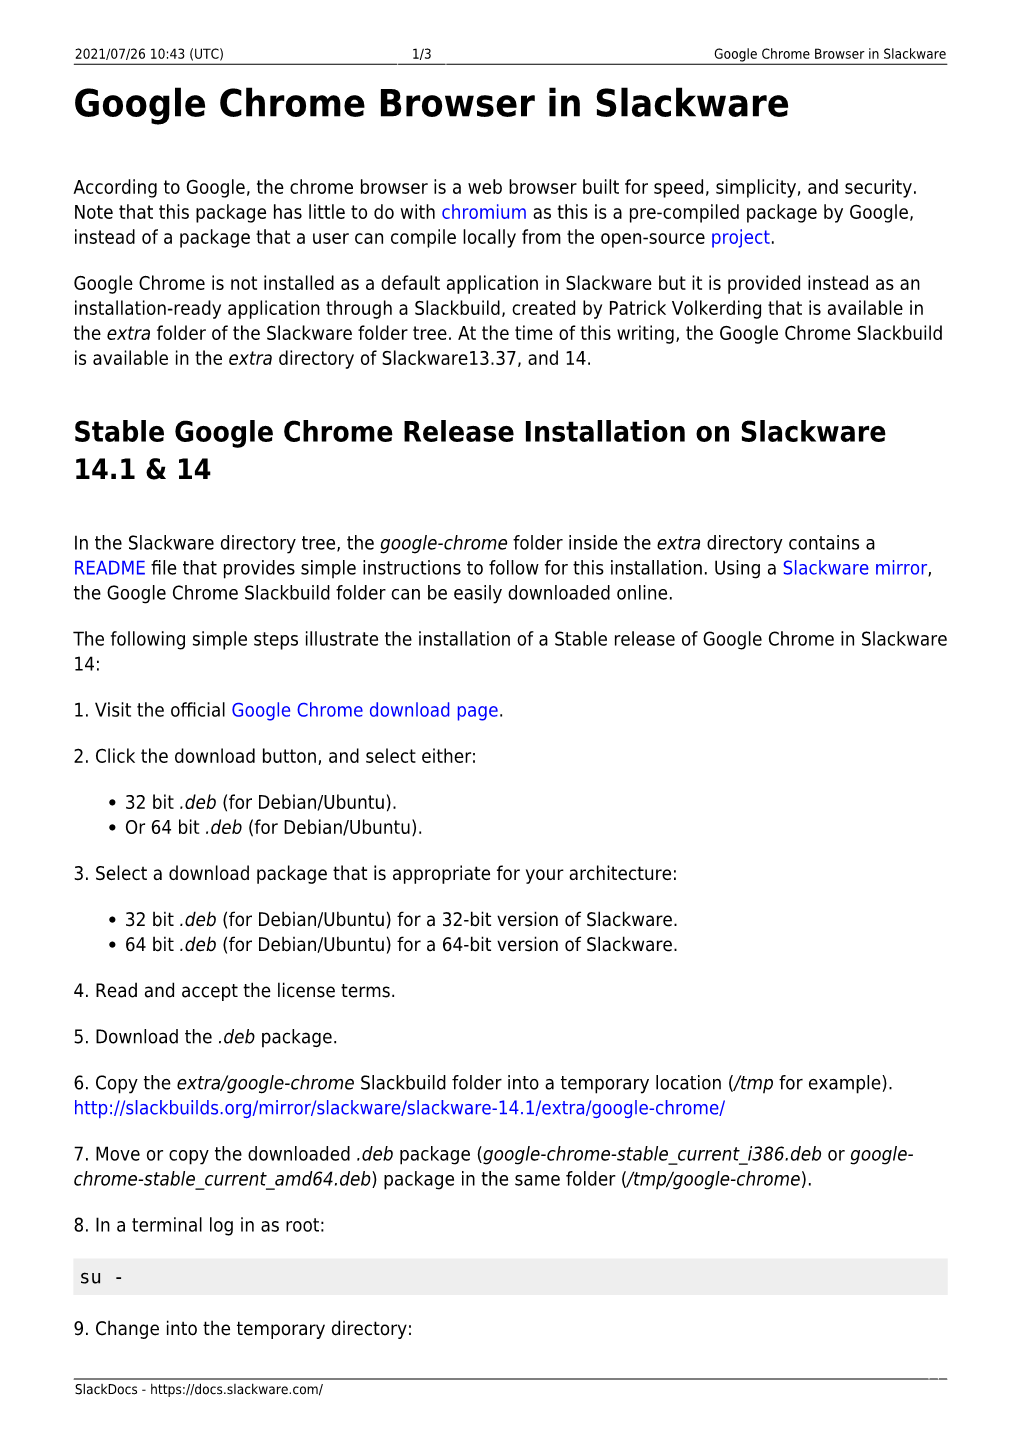 Google Chrome Browser in Slackware Google Chrome Browser in Slackware